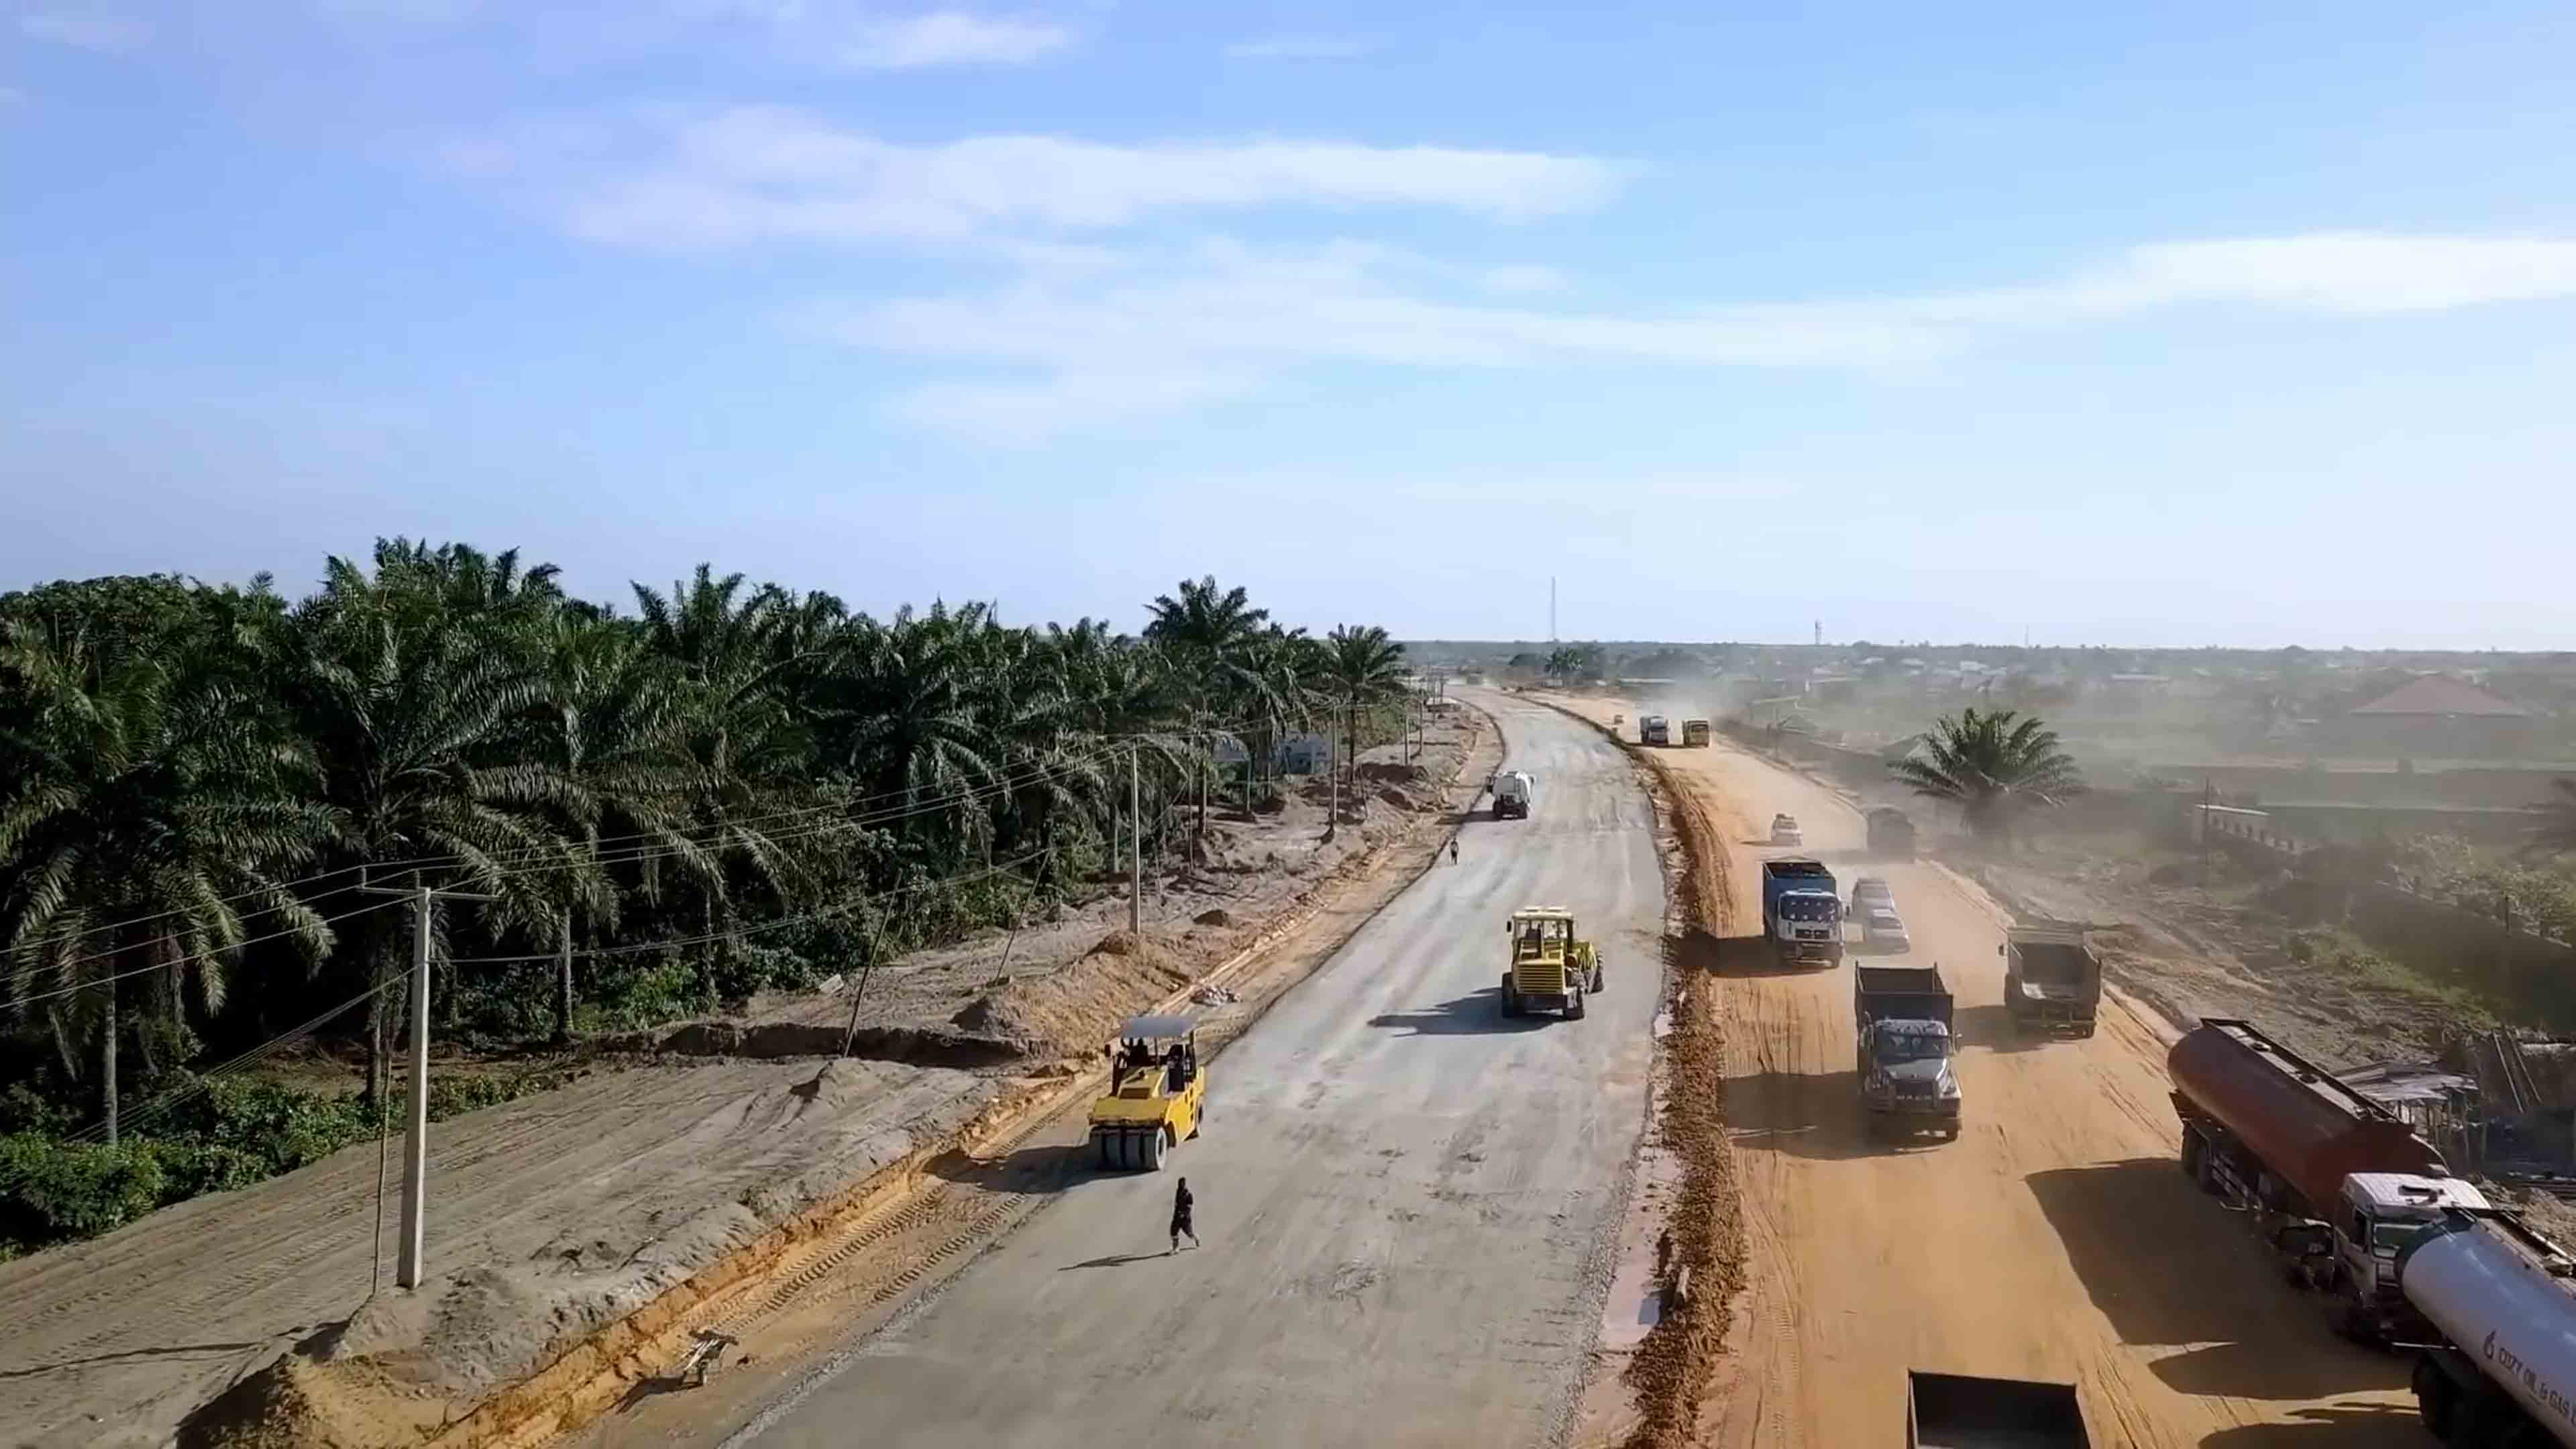 lekki-epe-road-construction